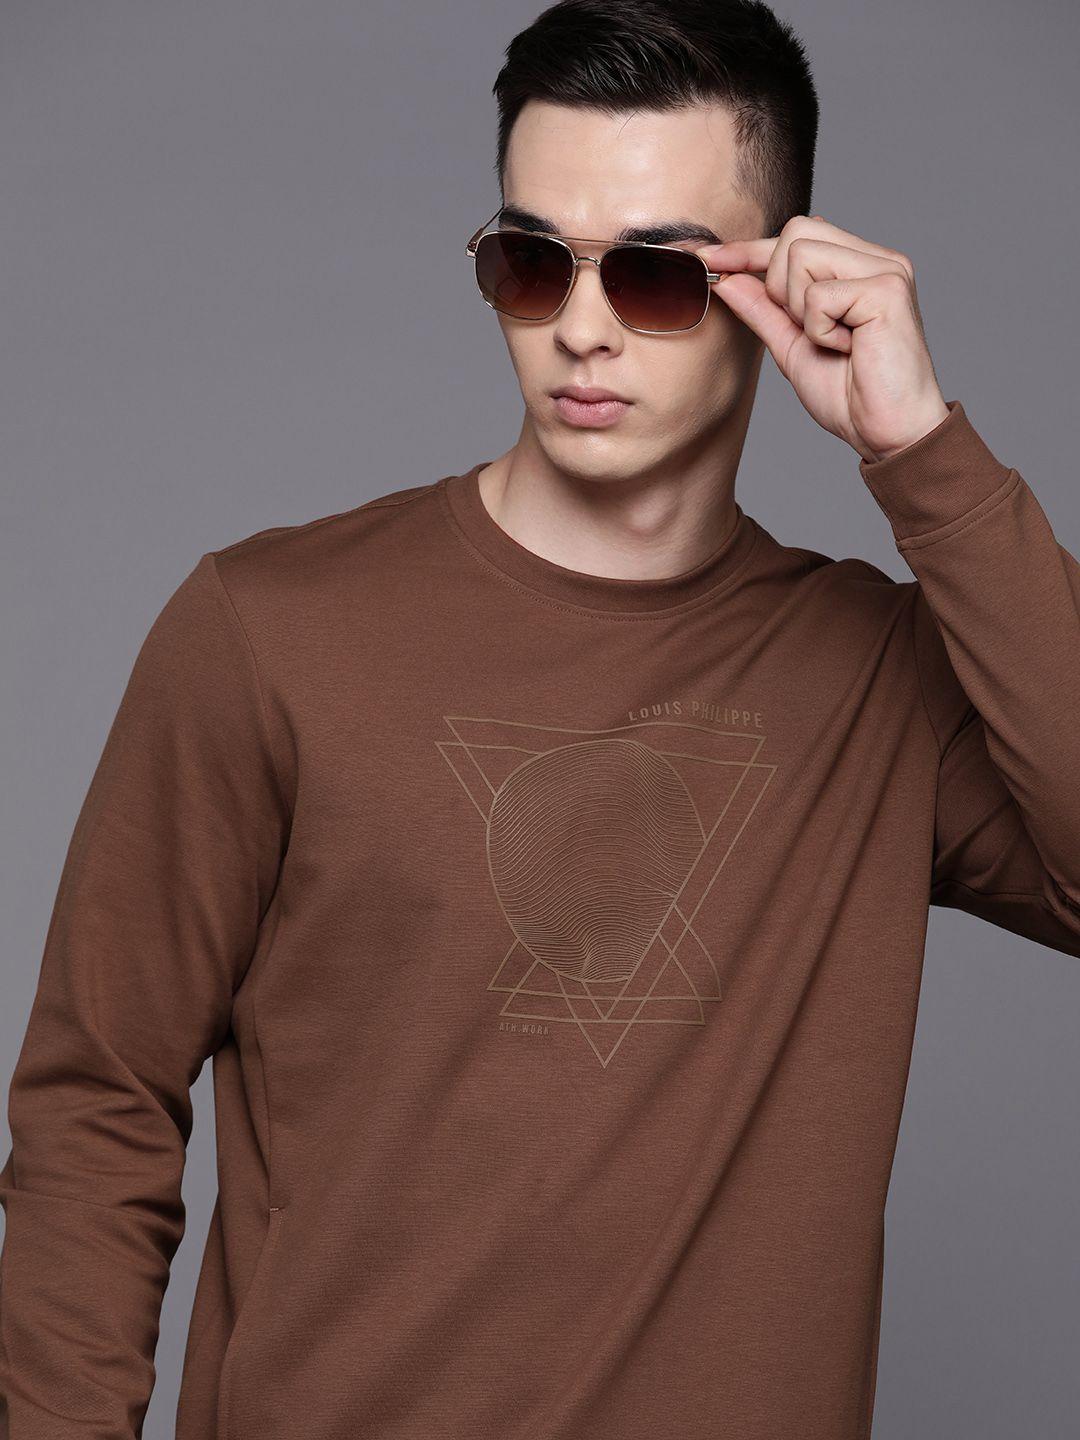 louis philippe ath.work geometric print sweatshirt